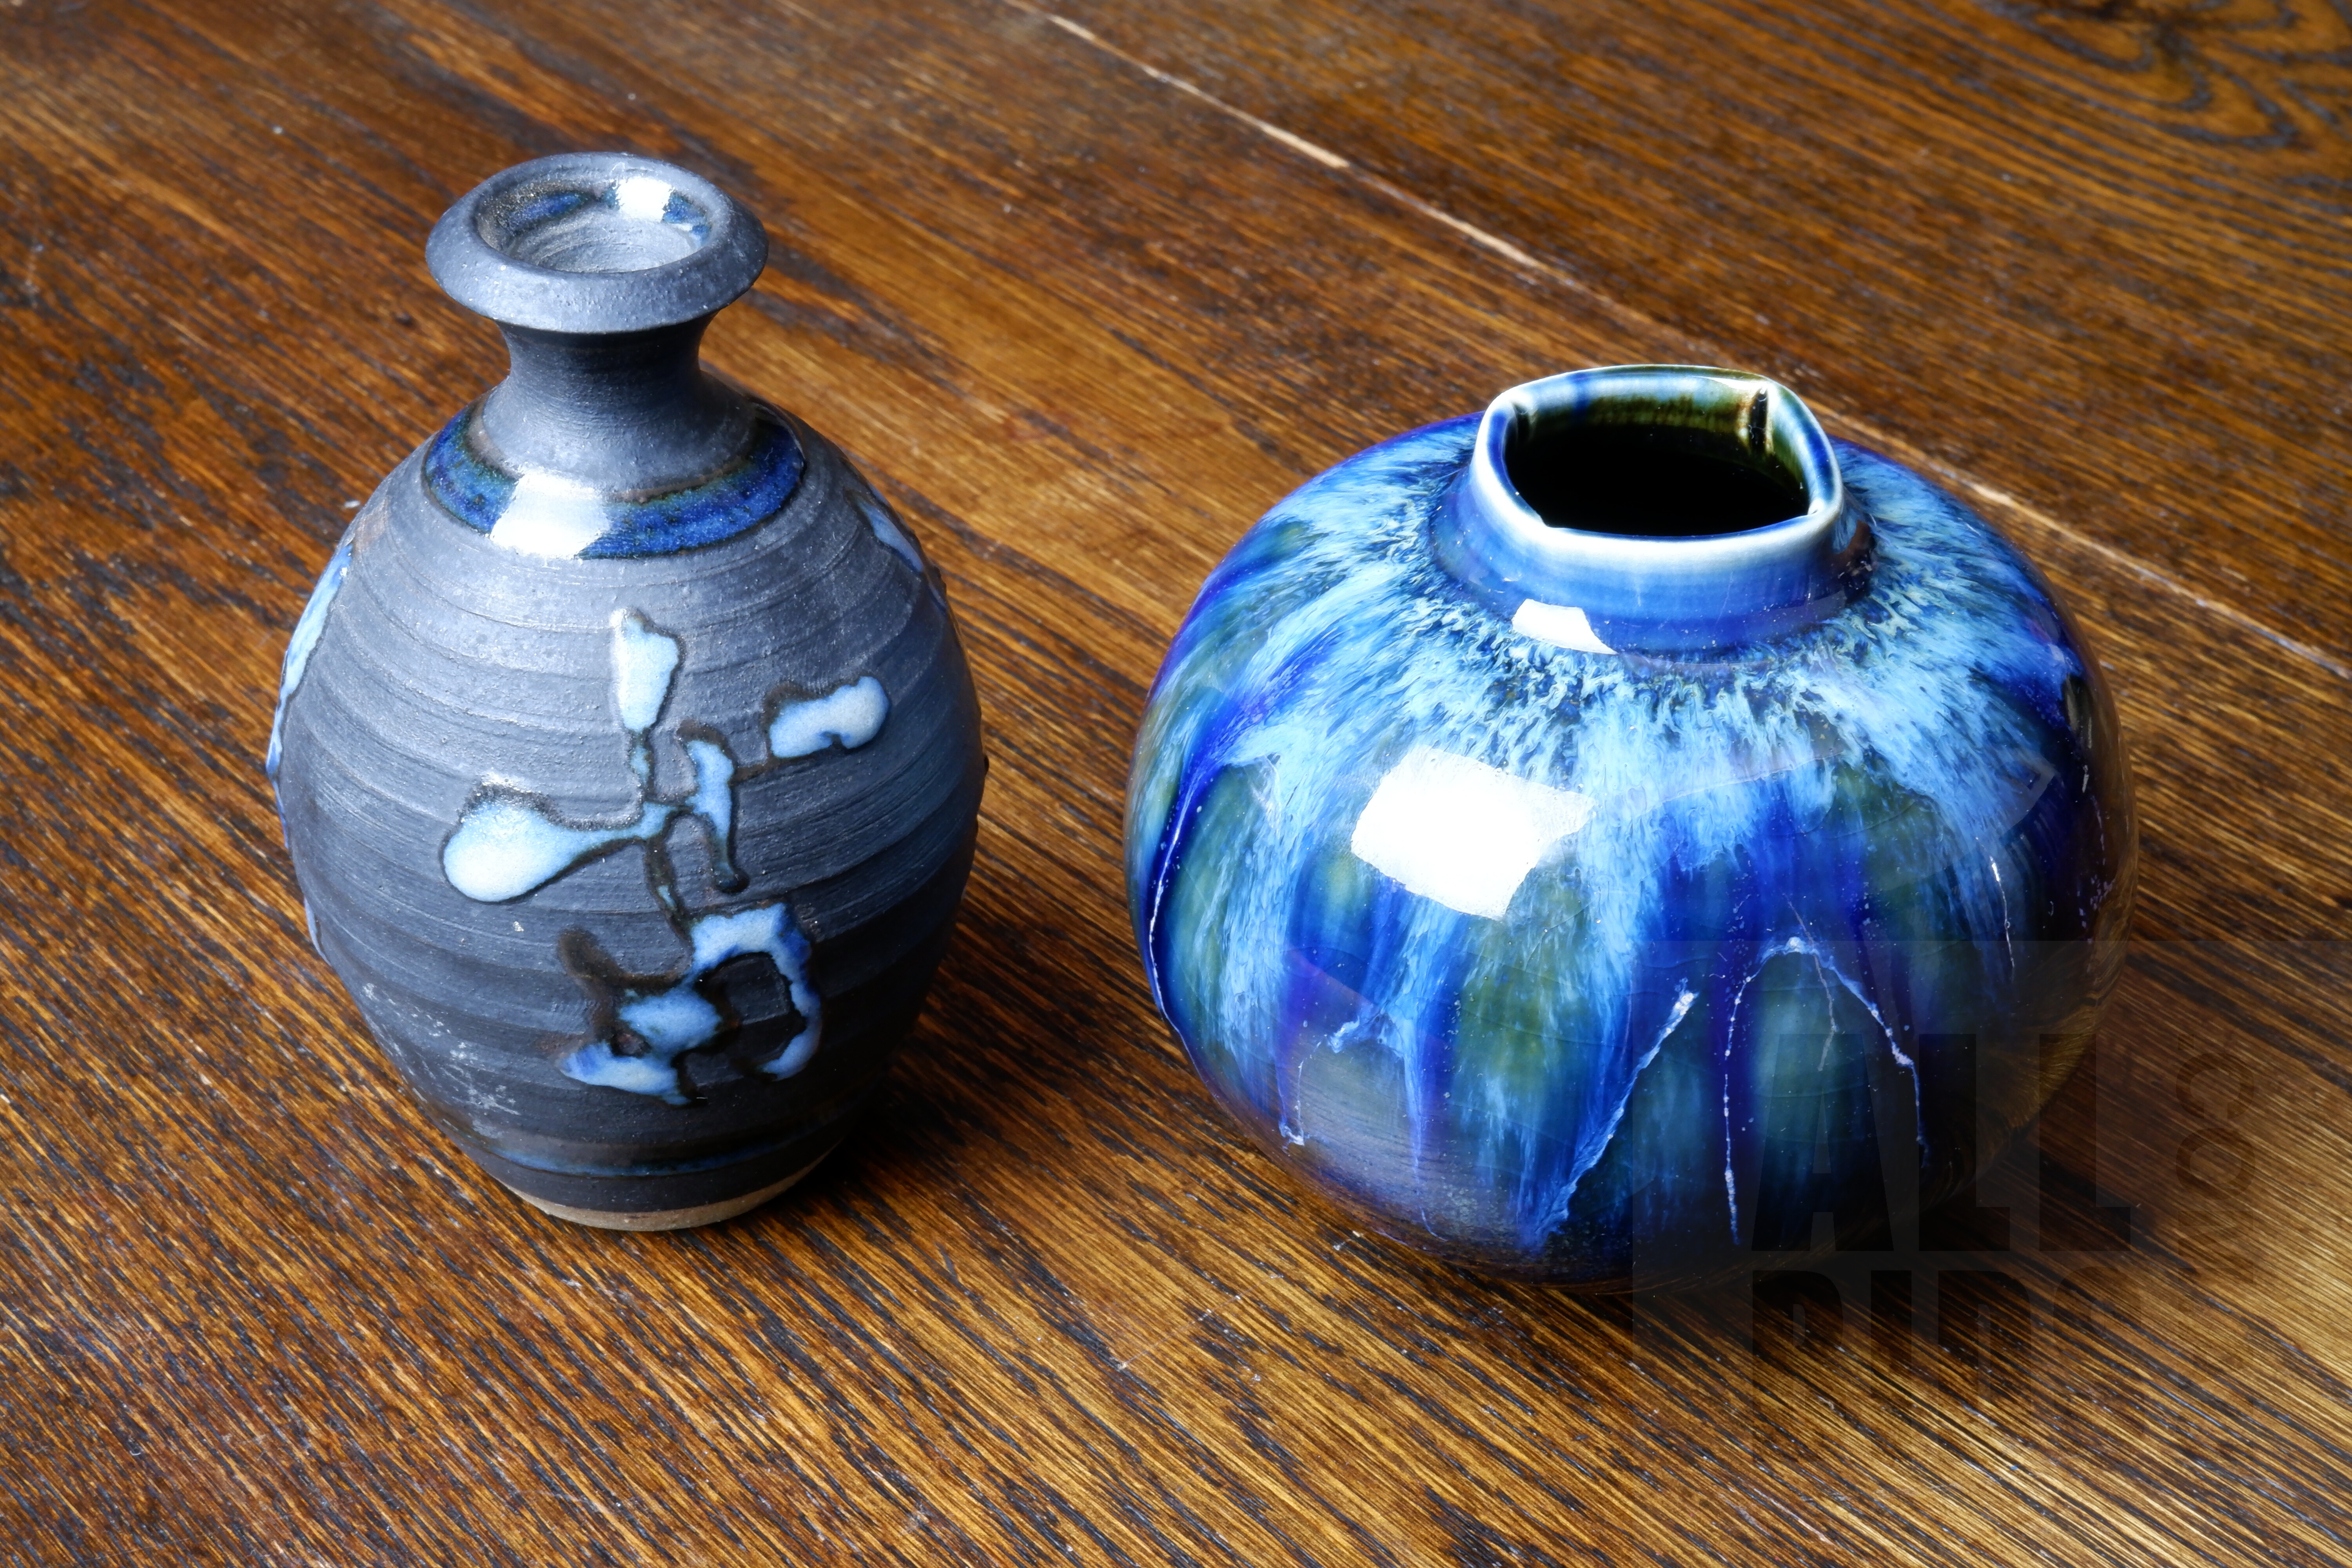 'Two Australian Studio Ceramic Vases'